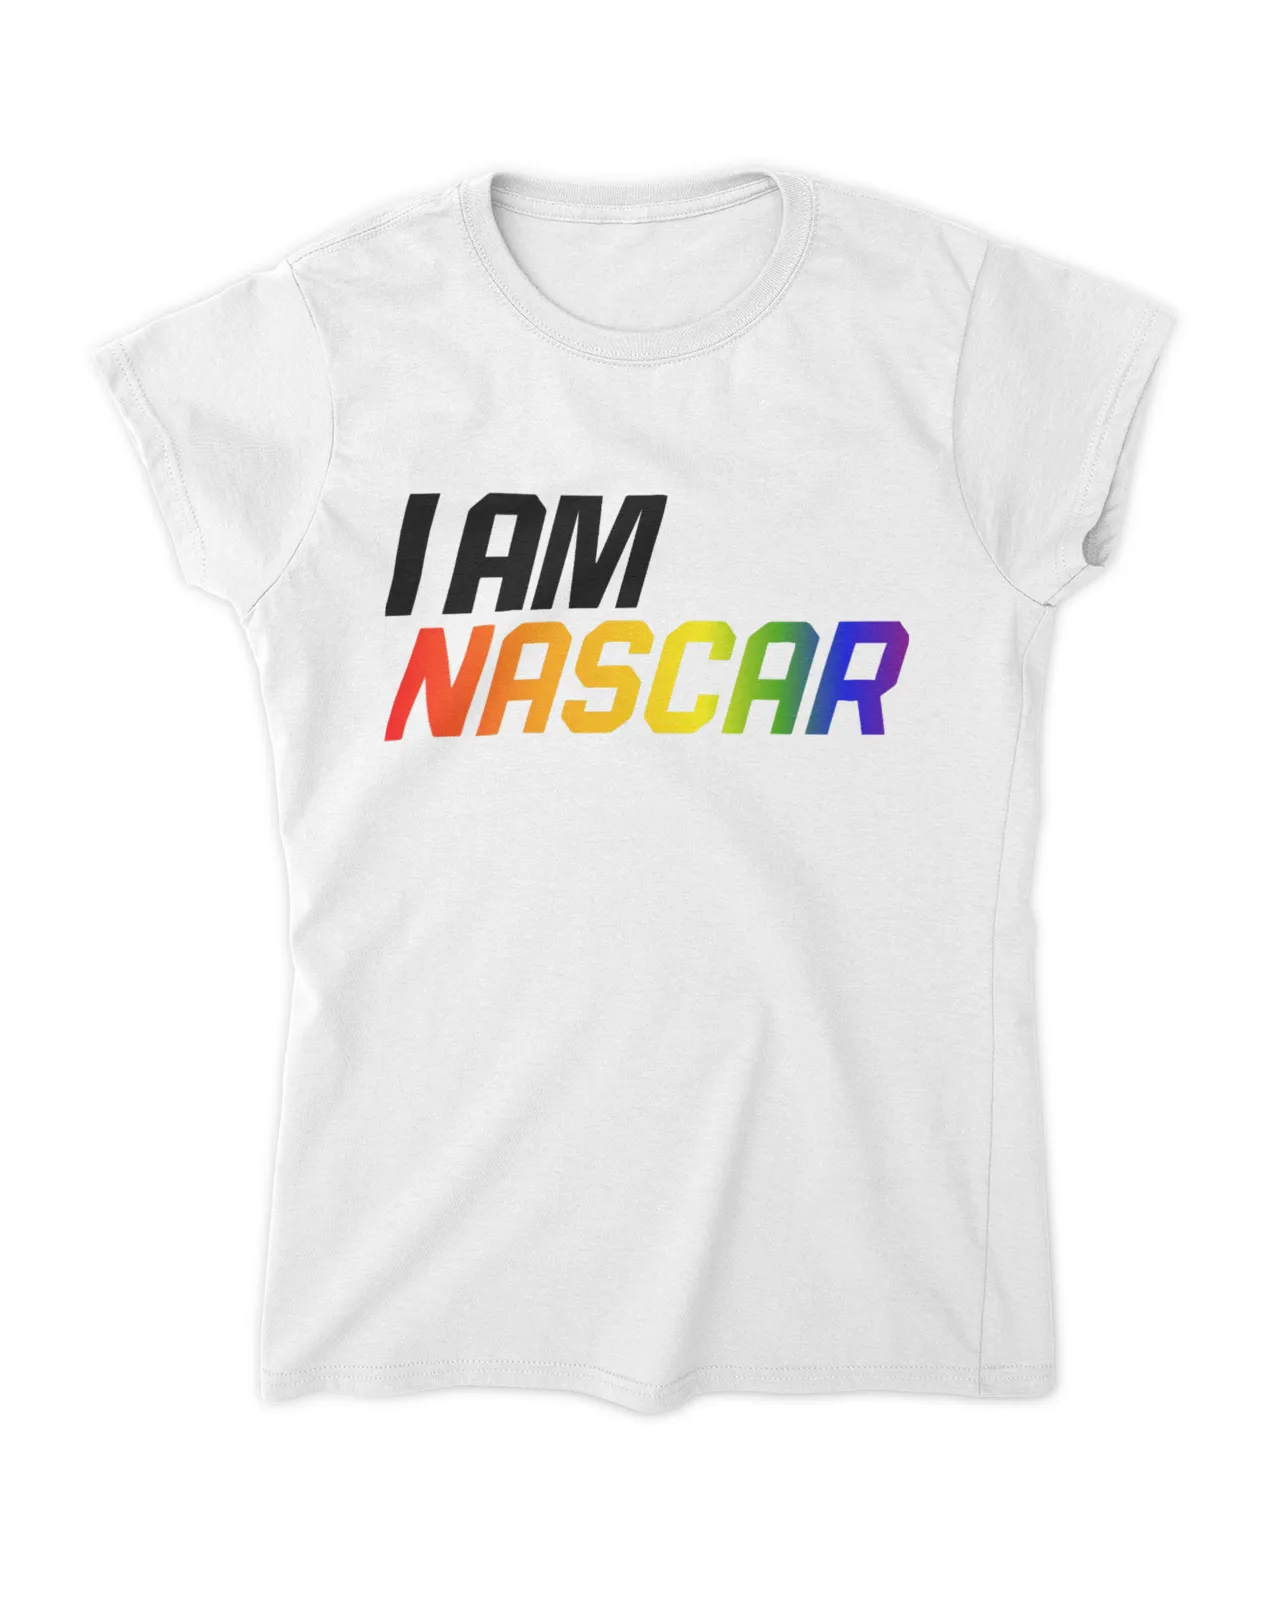 i-am-nascar-pride-shirt-lgbt